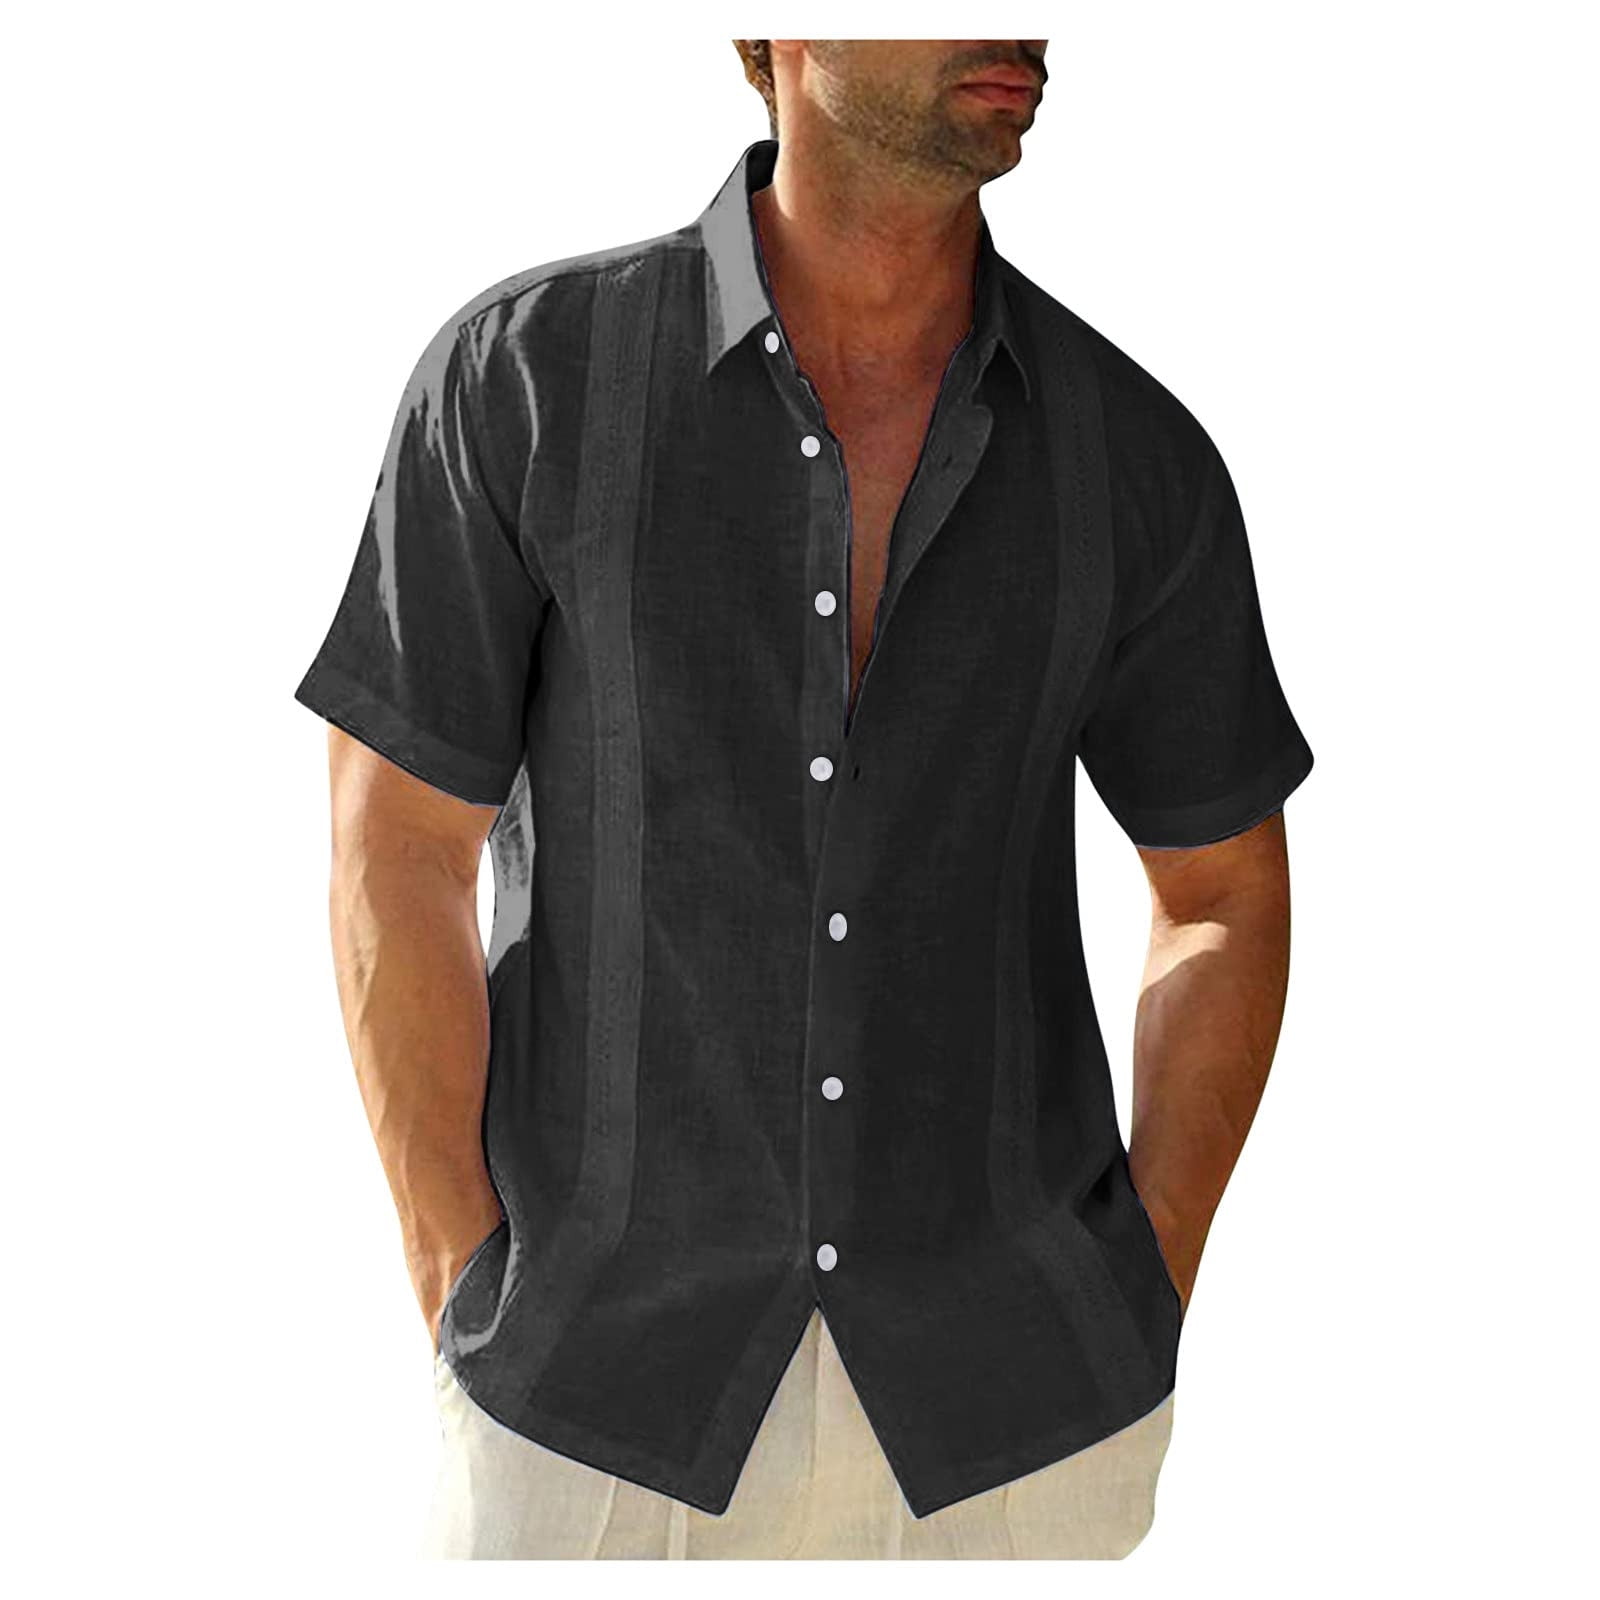 Hfyihgf Mens Linen Chambray Shirts Button Down Short Sleeve Shirt